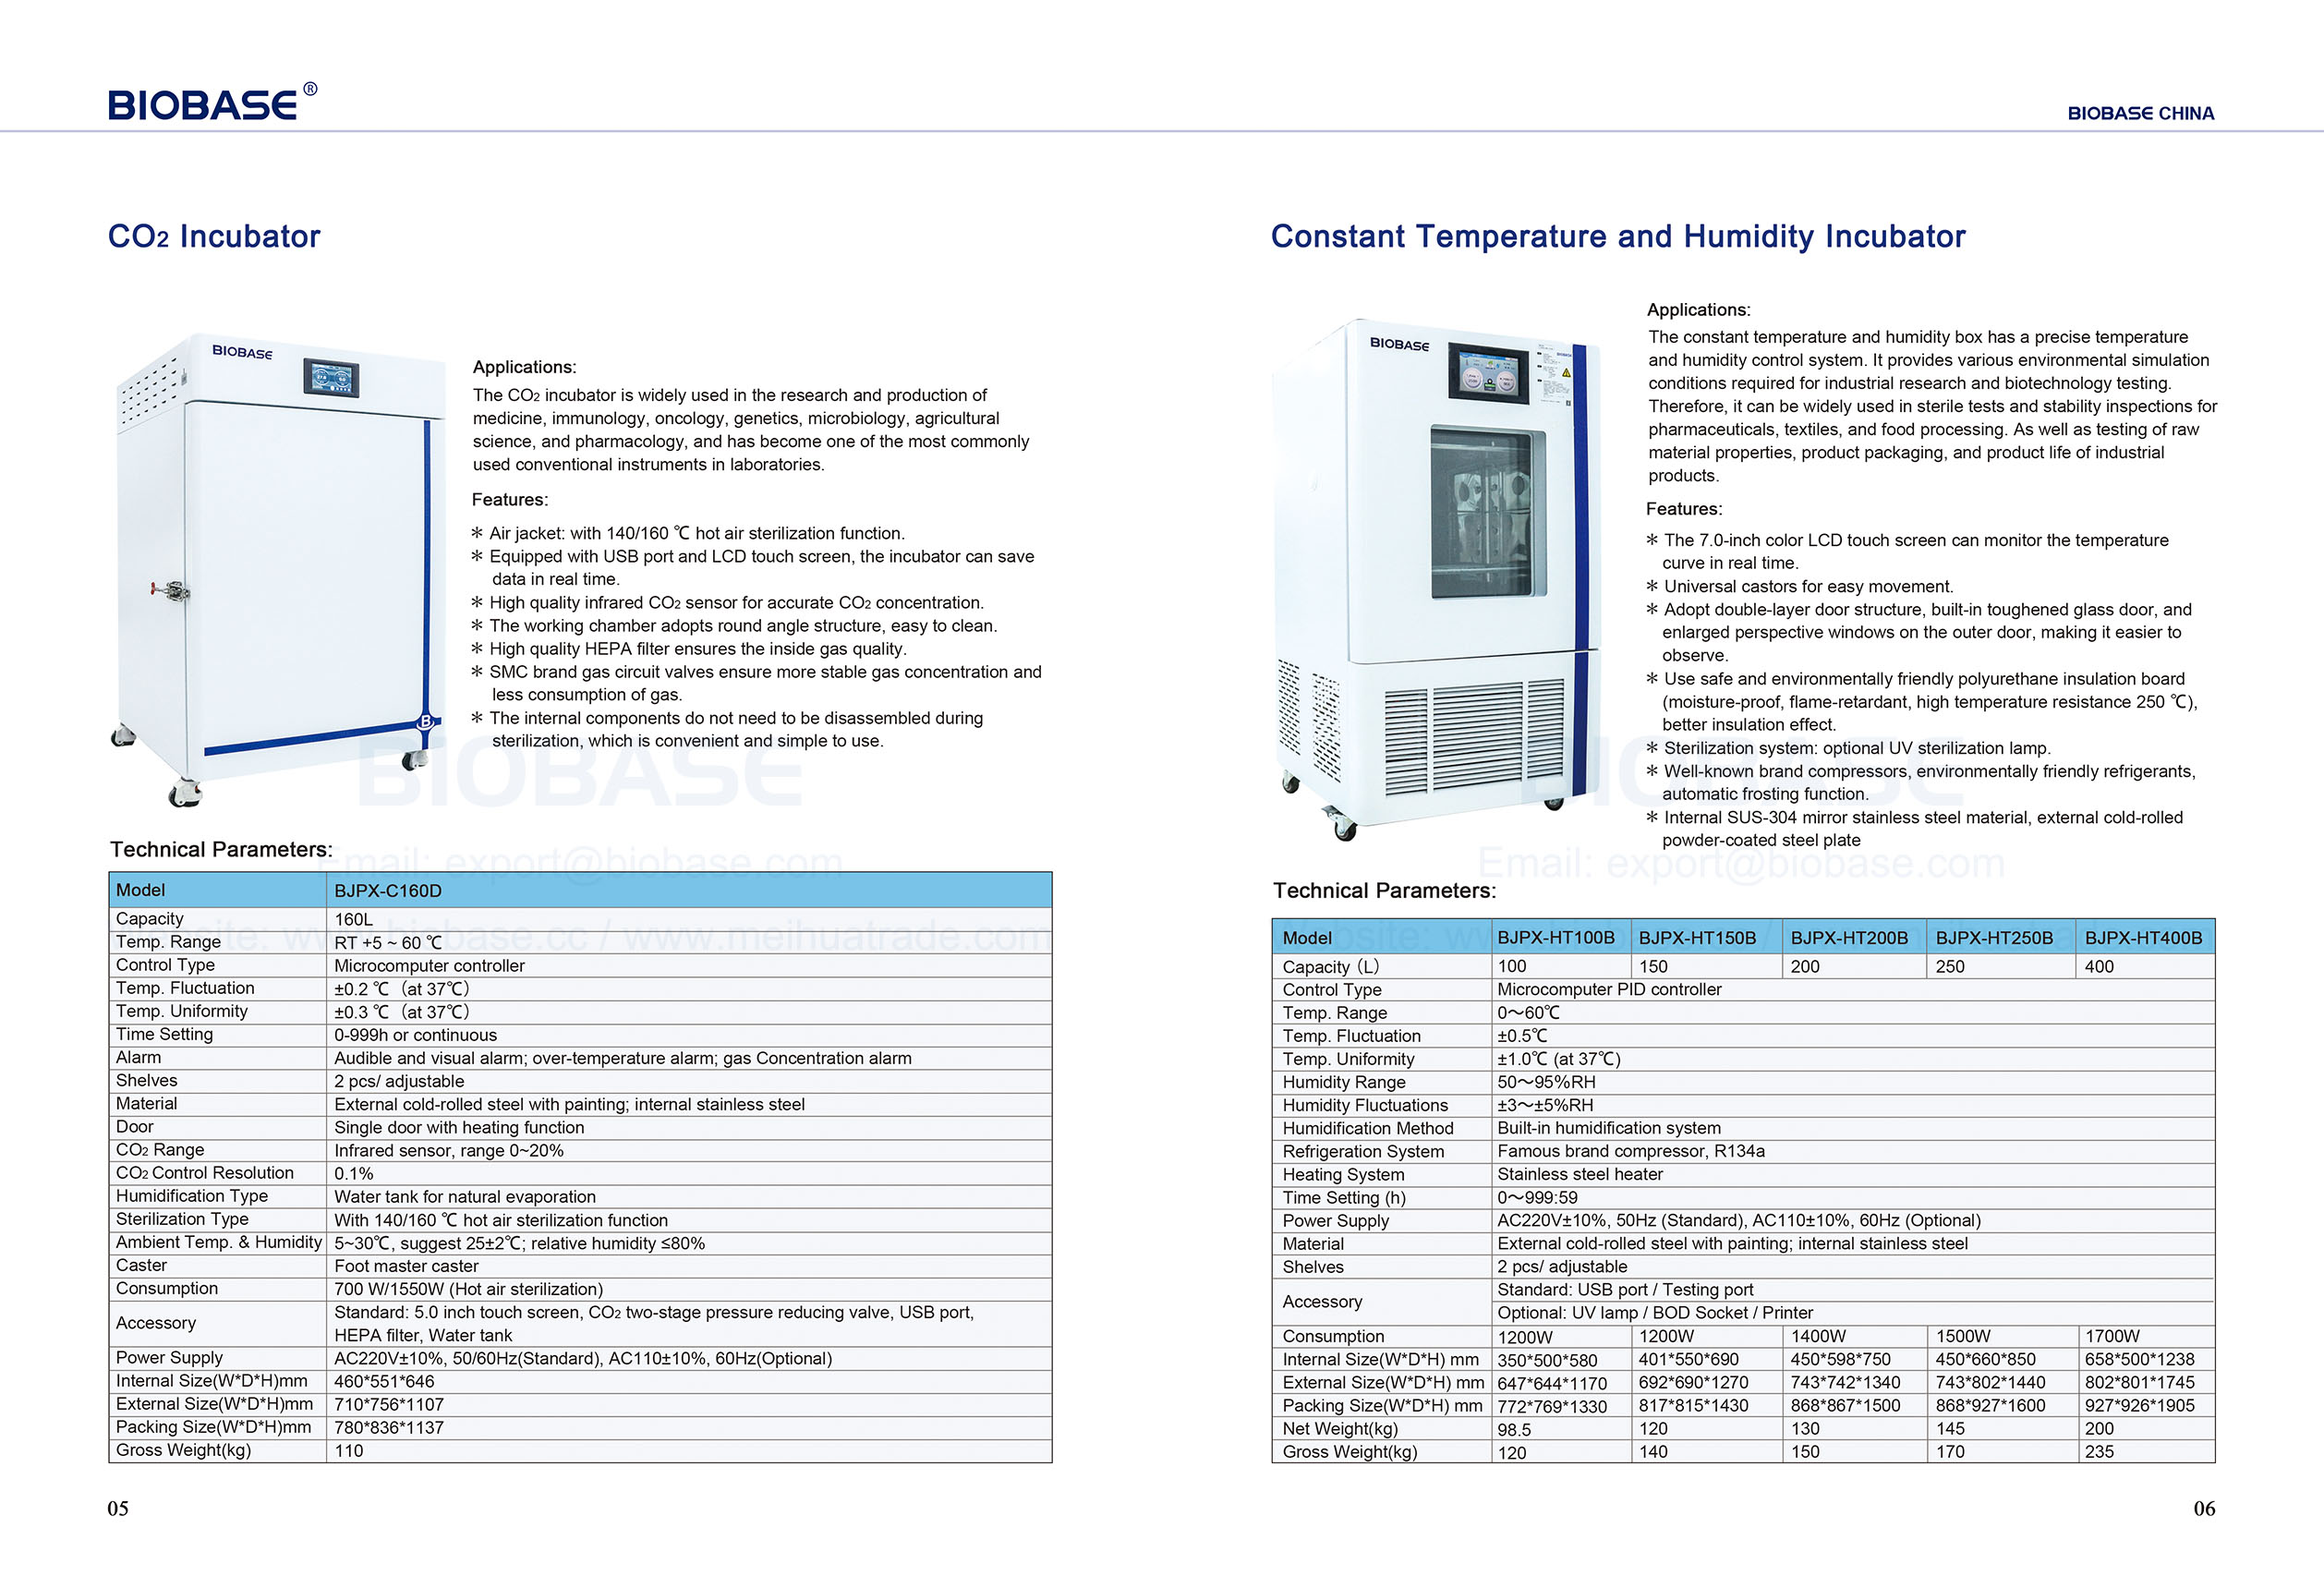 5-6 CO2 Incubator & Constant Temperature and Humidity Incubator